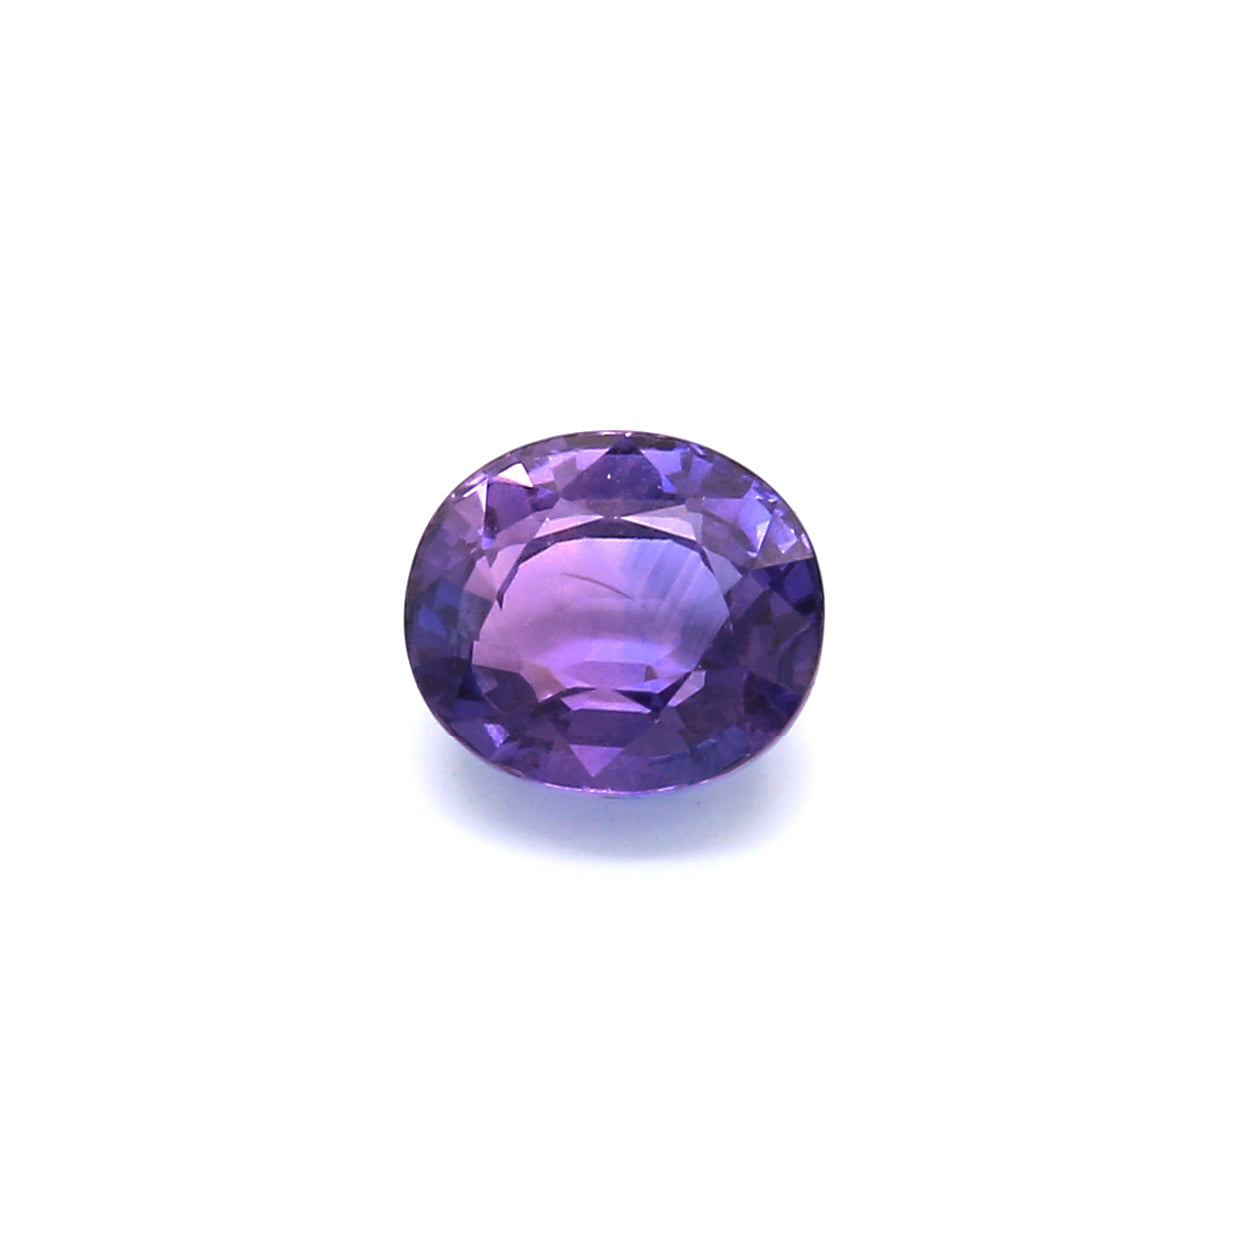 2.02ct Violetish Blue / Purple, Oval Color Change Sapphire, Heated, Sri Lanka - 7.32 x 6.45 x 4.33mm